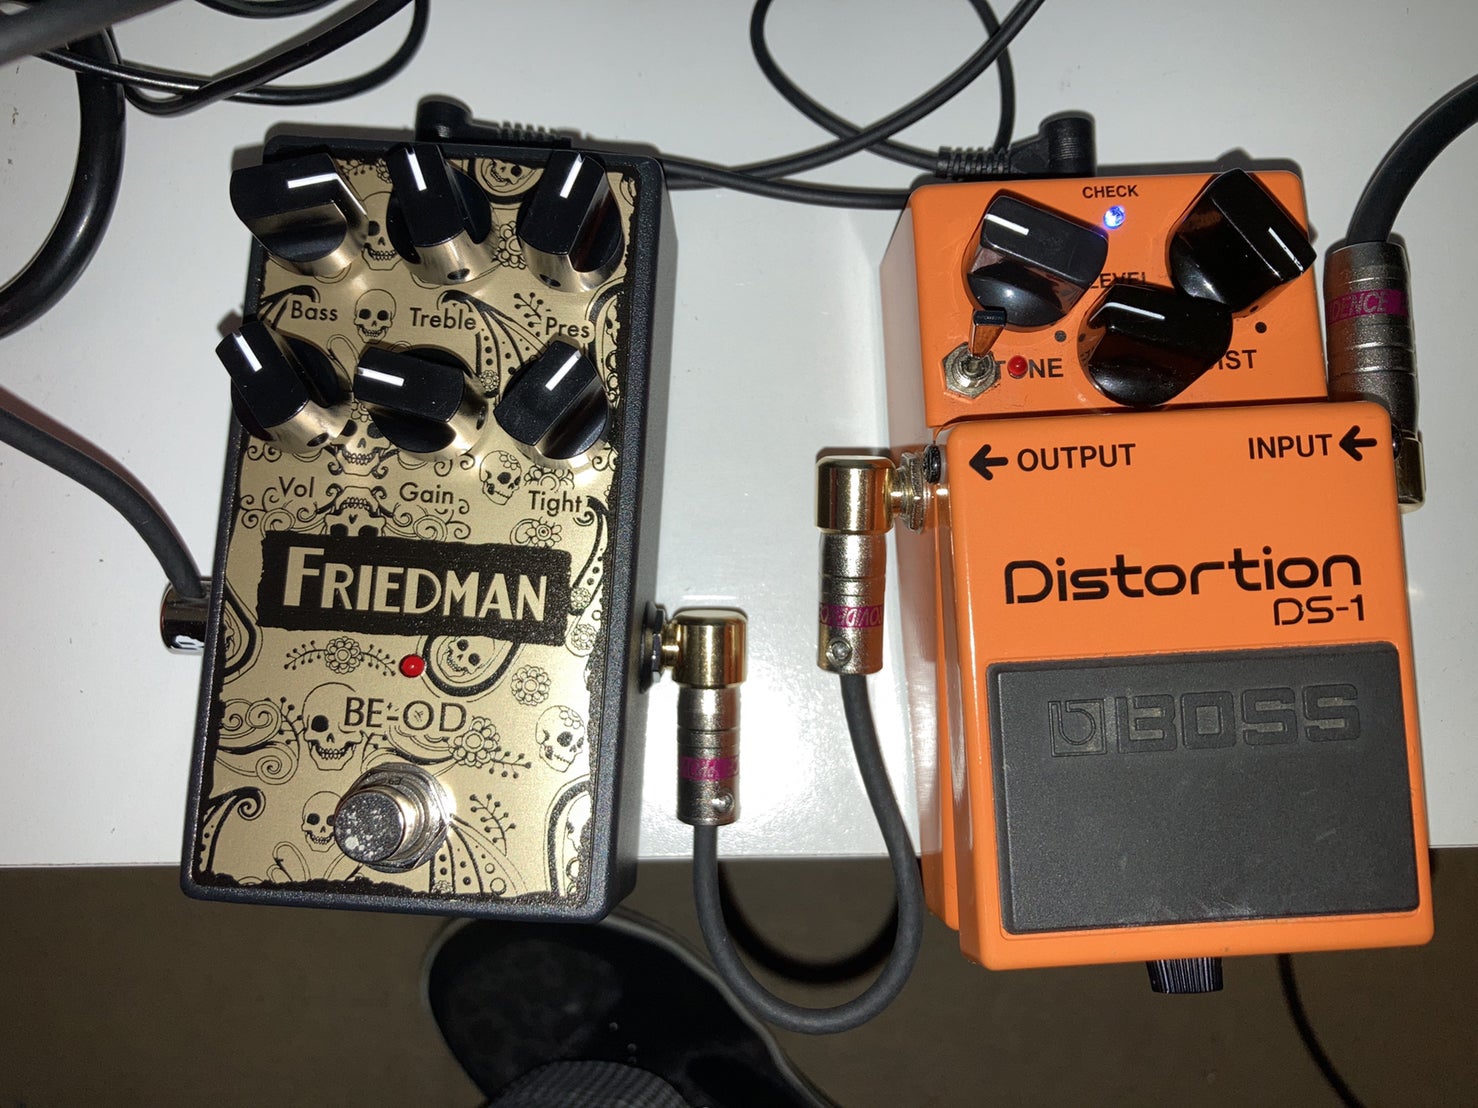 My New Gear「ベーオデ」！（Friedman / BE-OD） | New Guitar Note +